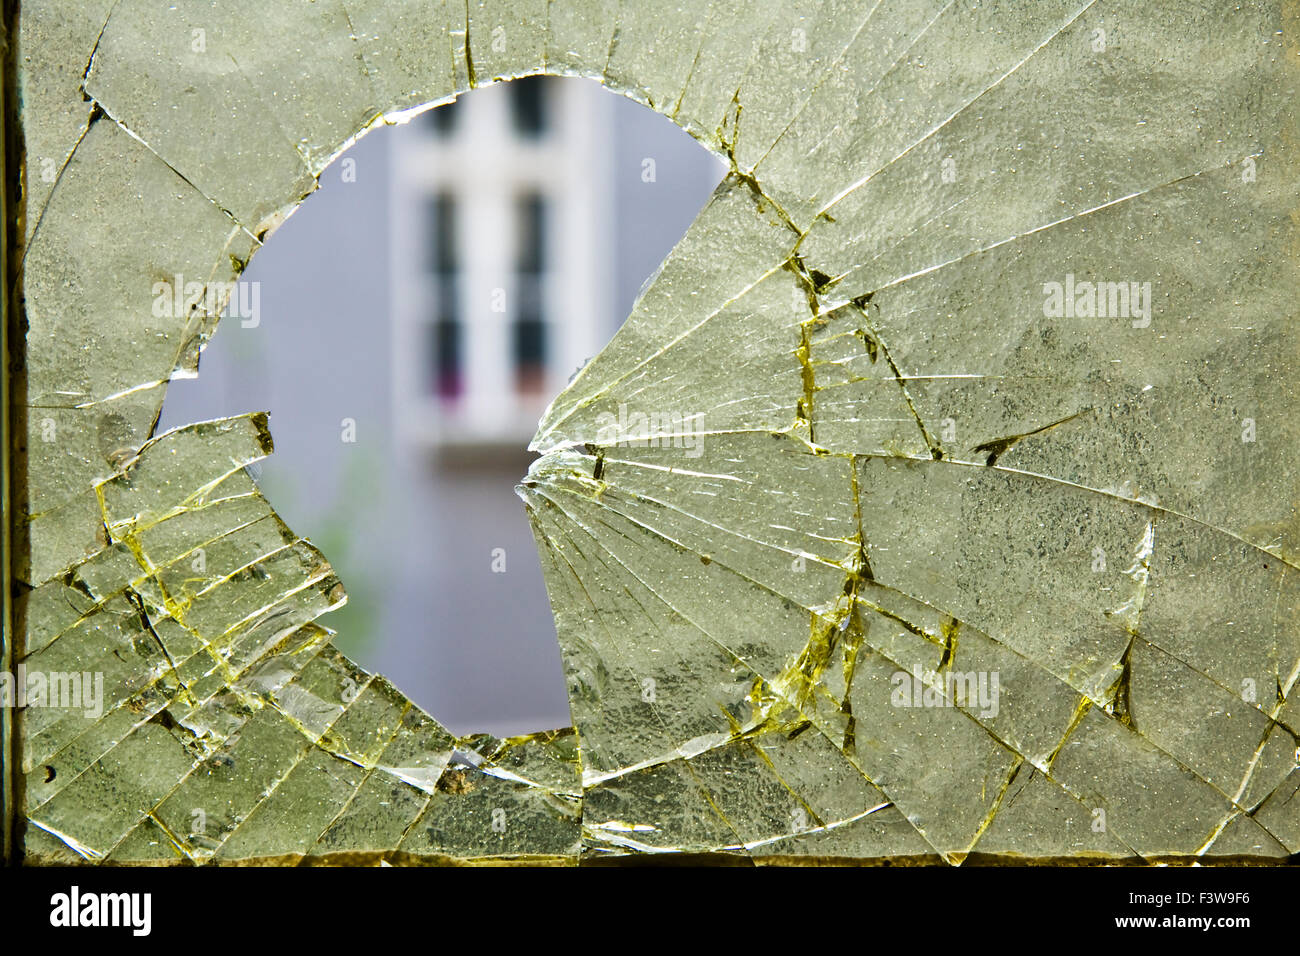 windows, broken pieces of glass, Stock Photo